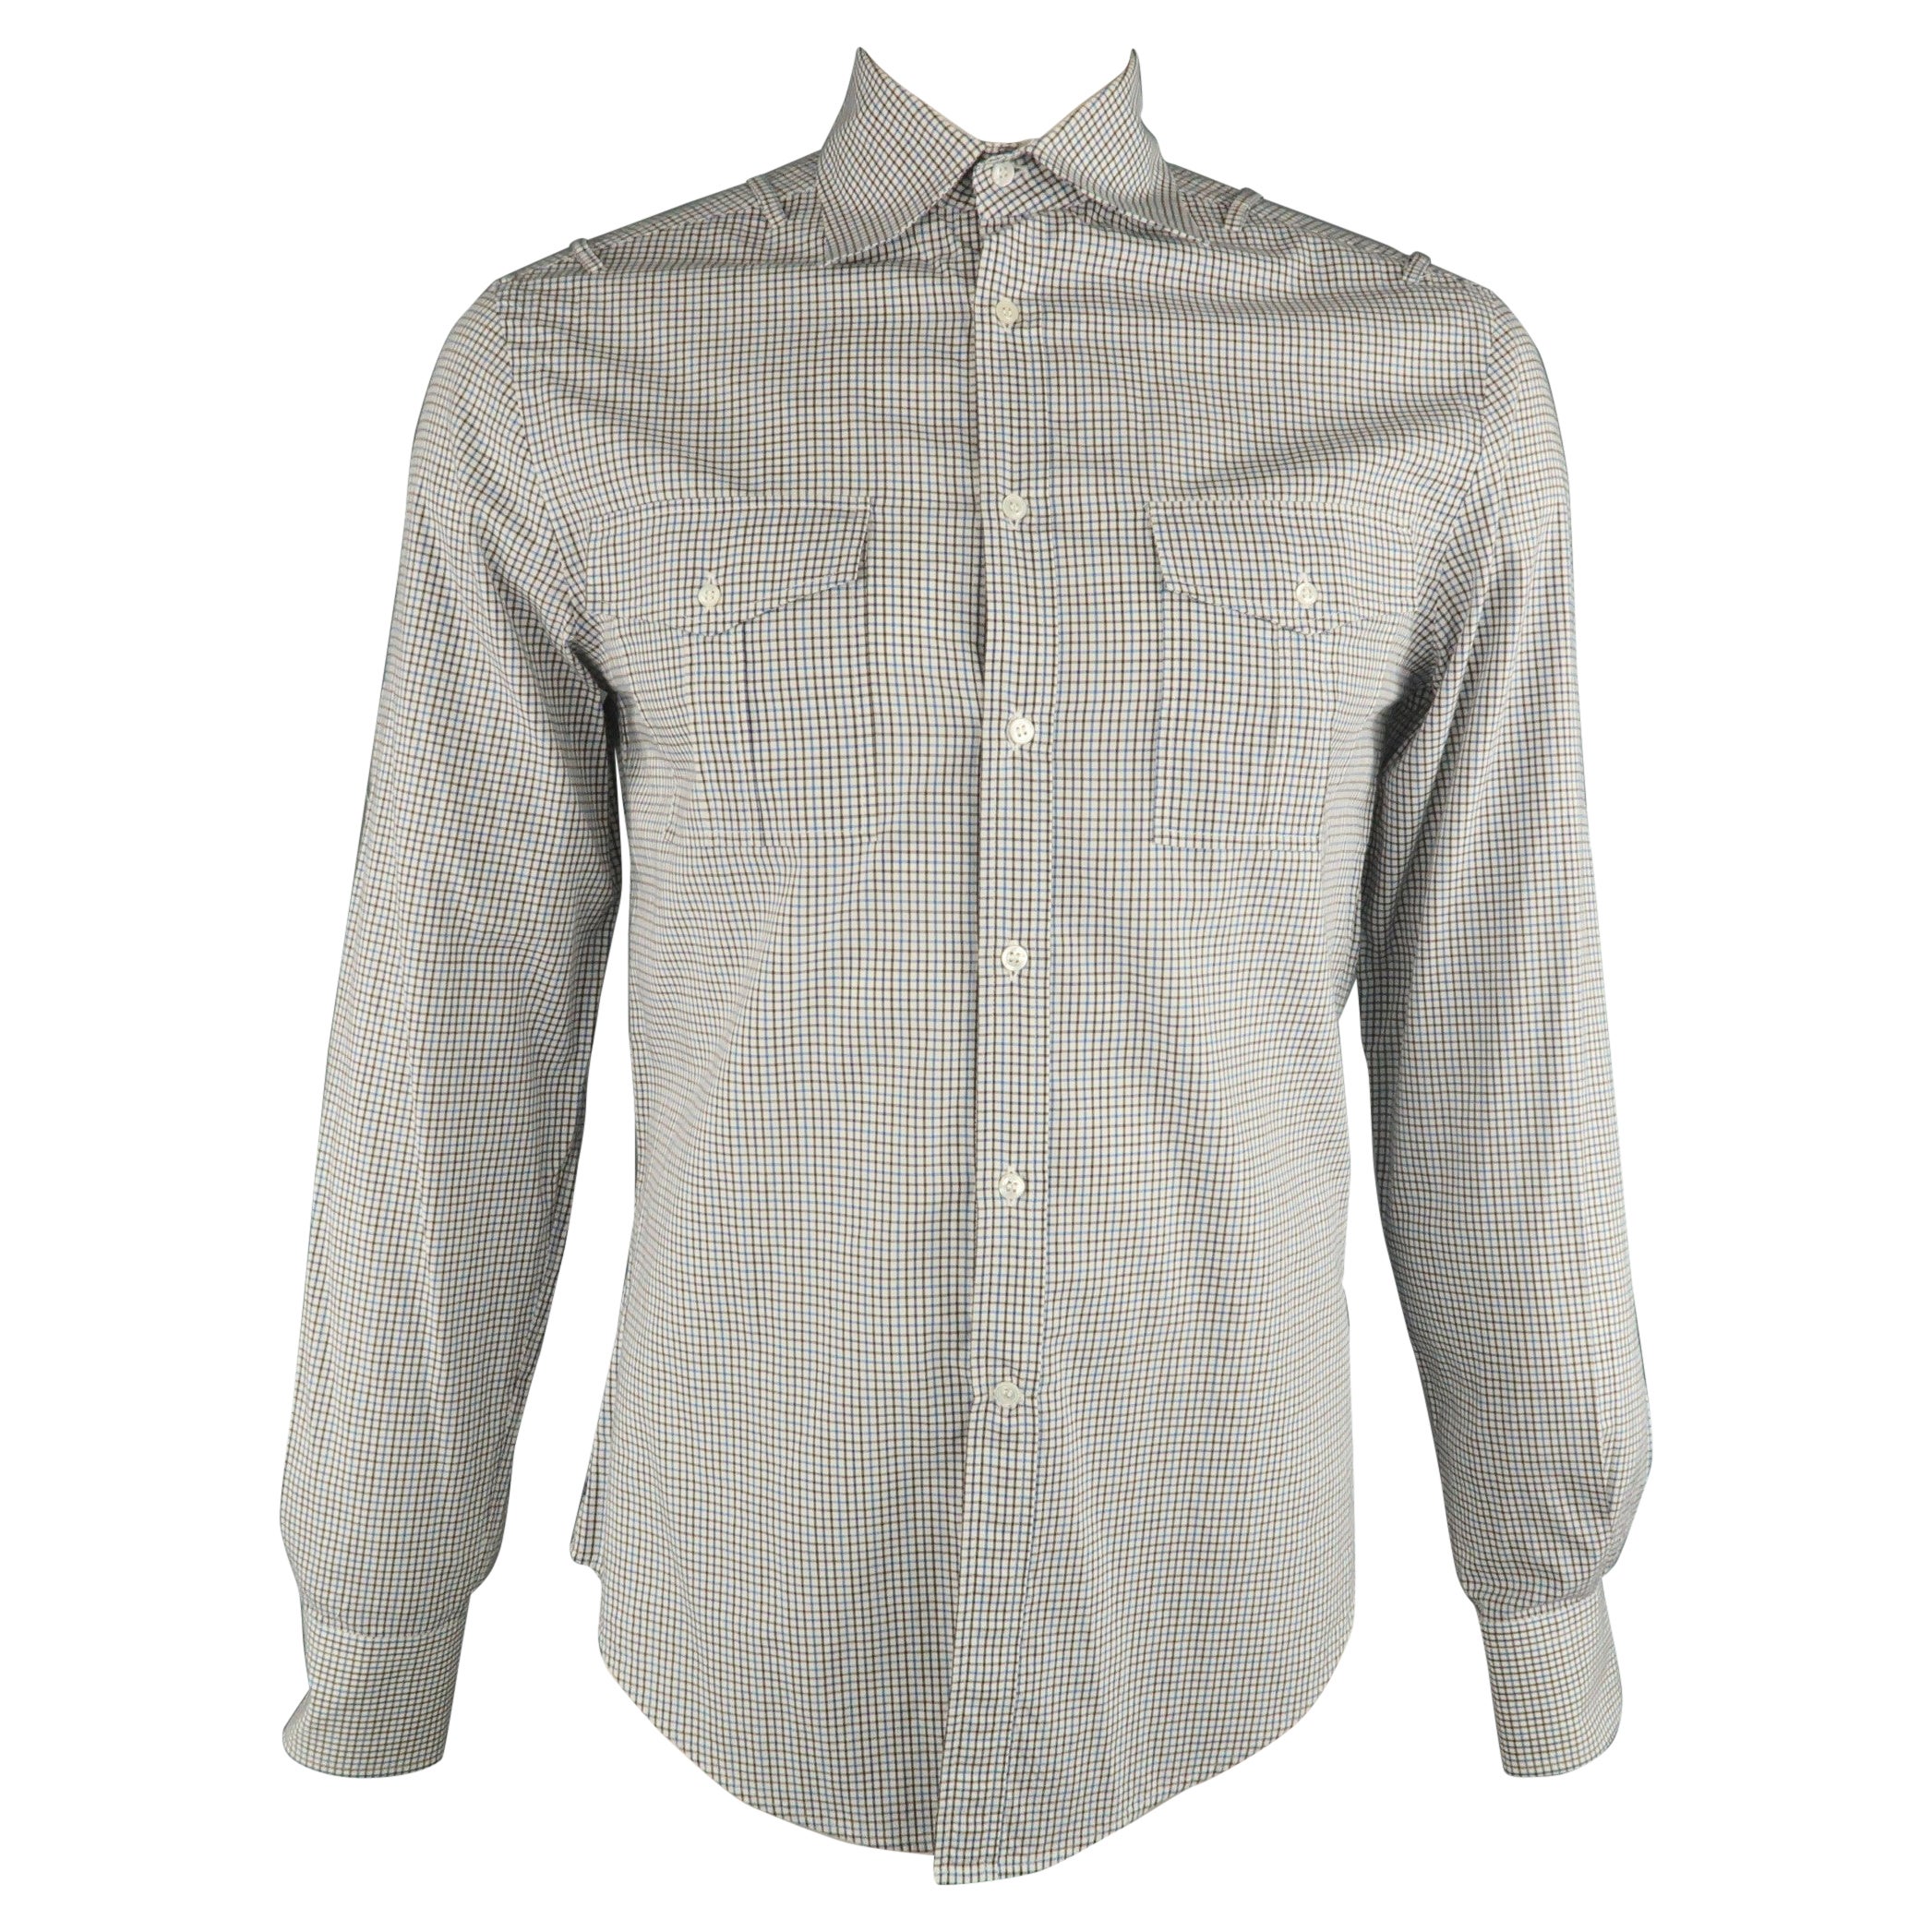 MICHAEL BASTIAN Size S Blue & Brown Plaid Cotton Button Up Long Sleeve Shirt